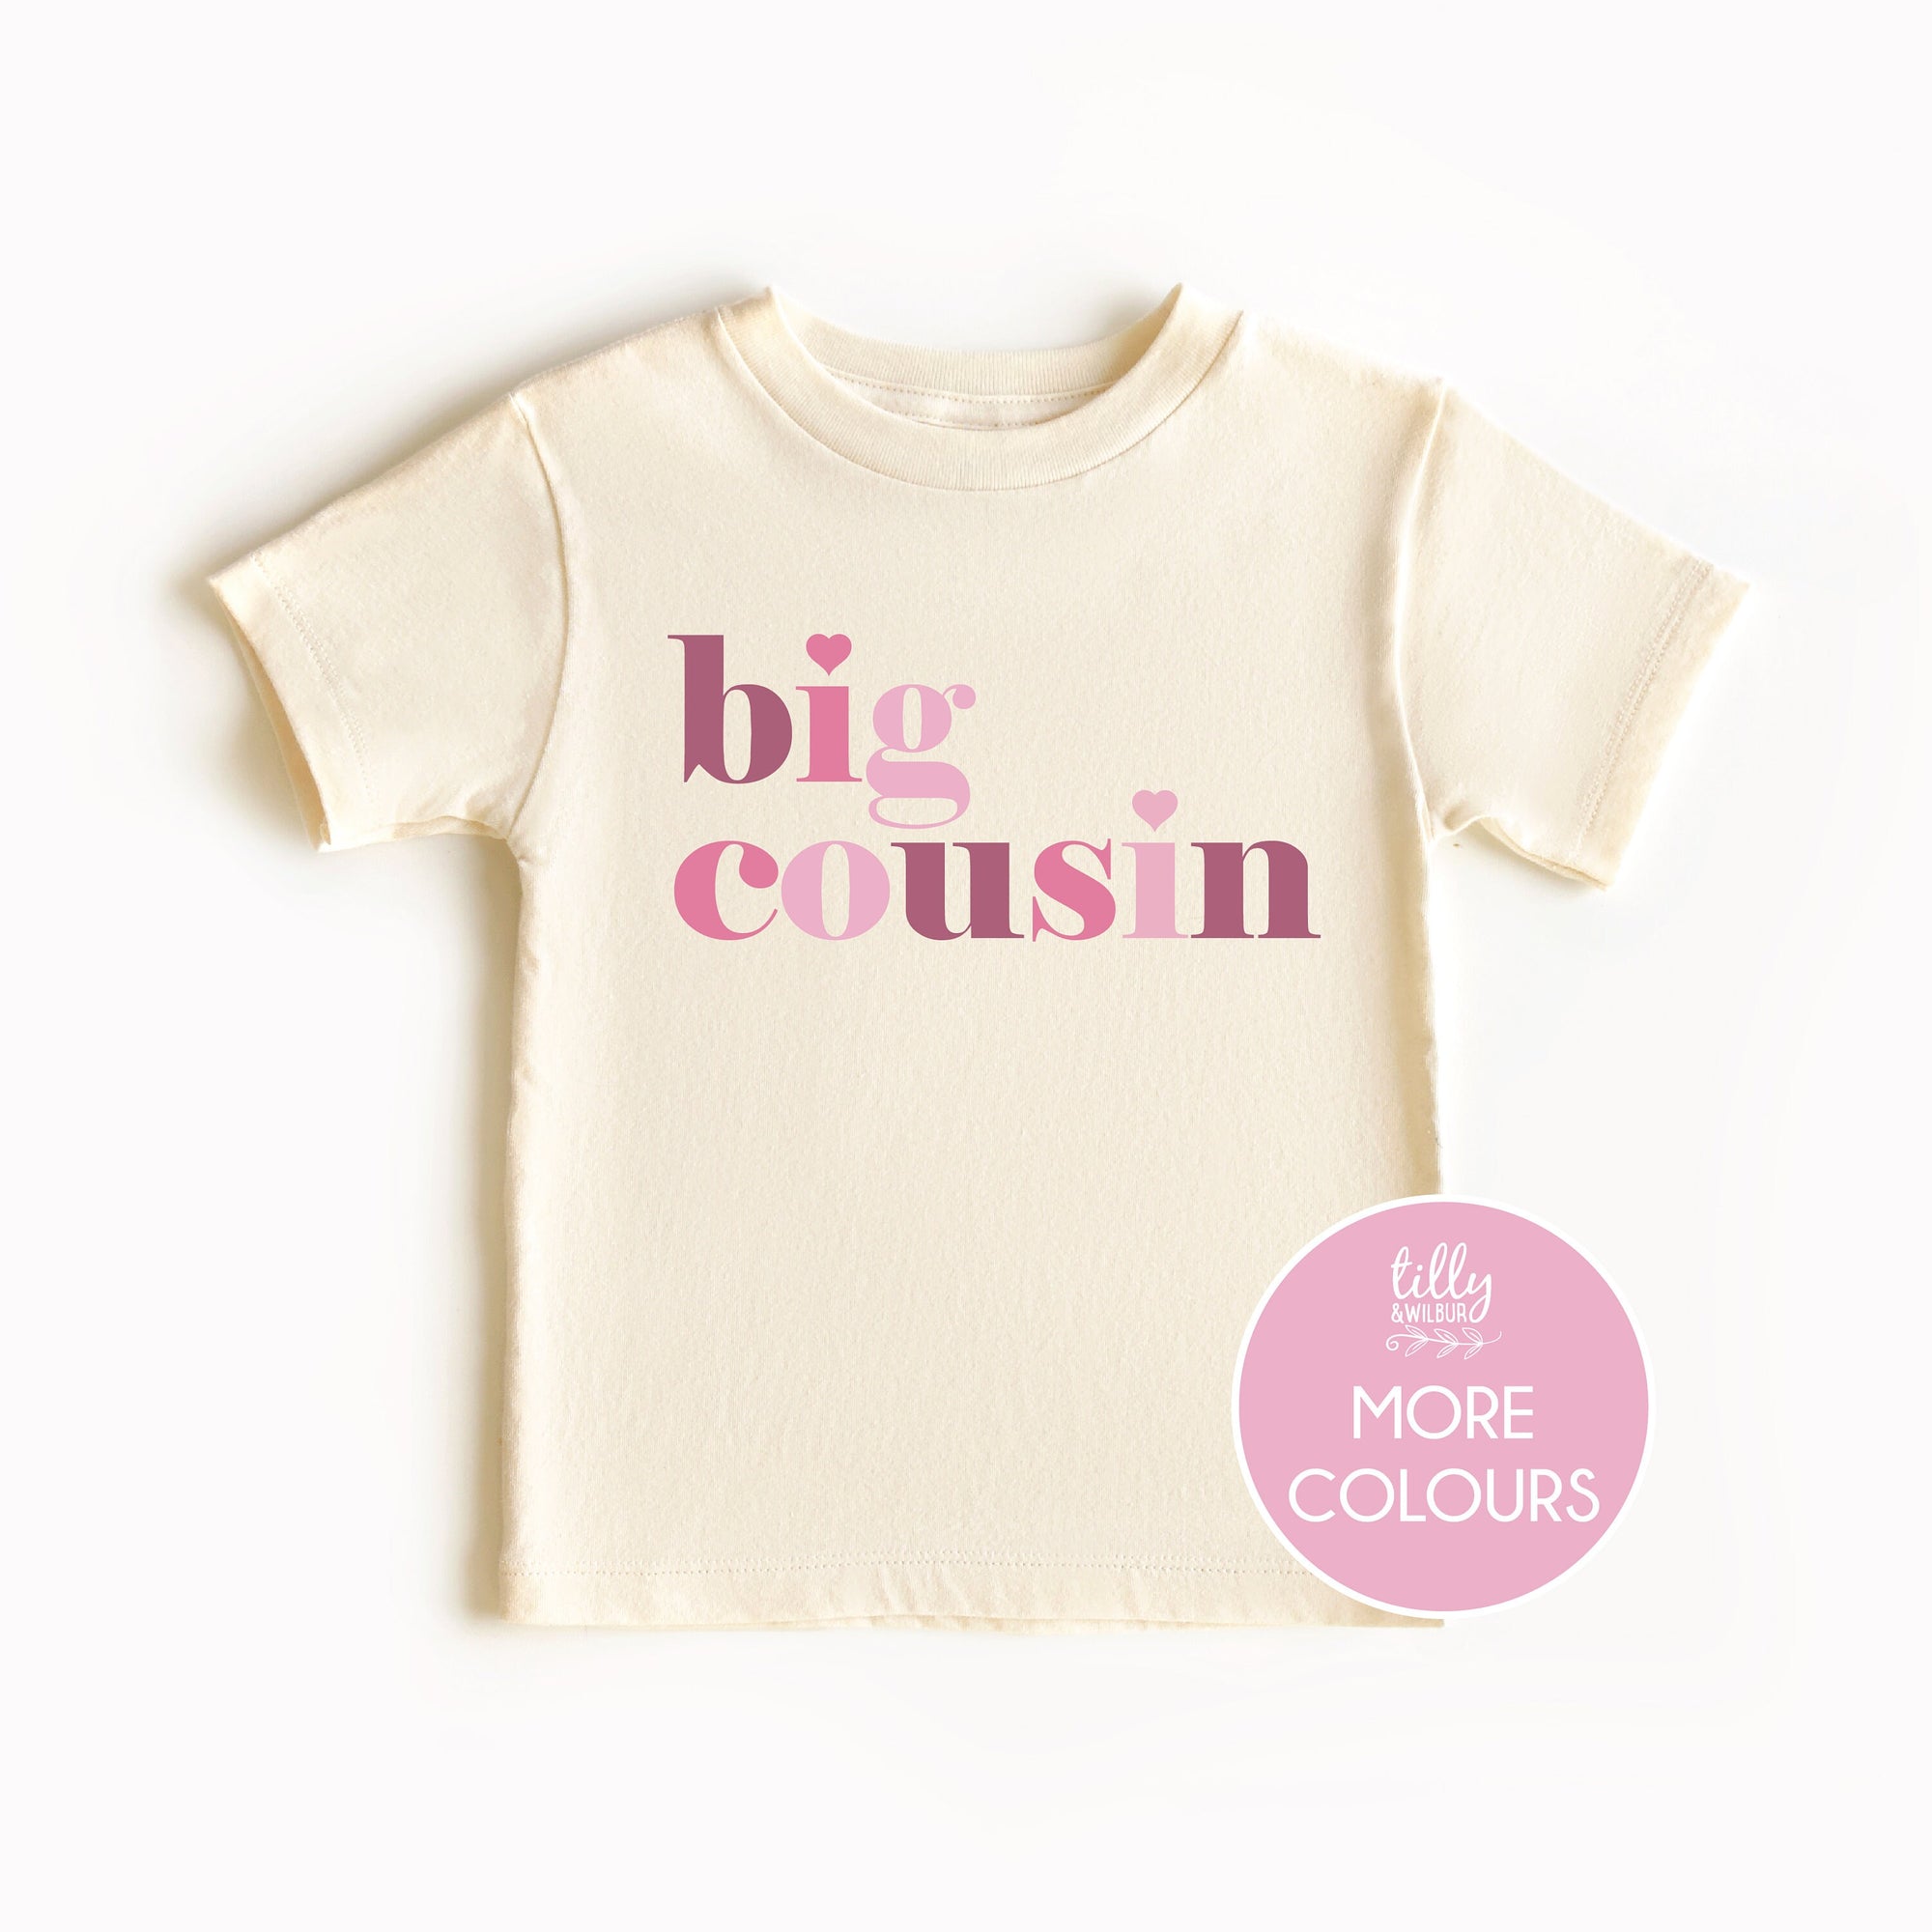 Big Cousin T-Shirt, I'm Going To Be A Big Cousin TShirt, Pregnancy Announcement, Big Cousin Shirt, Cousin Gift, Big Cuz, Matching Girls Boys